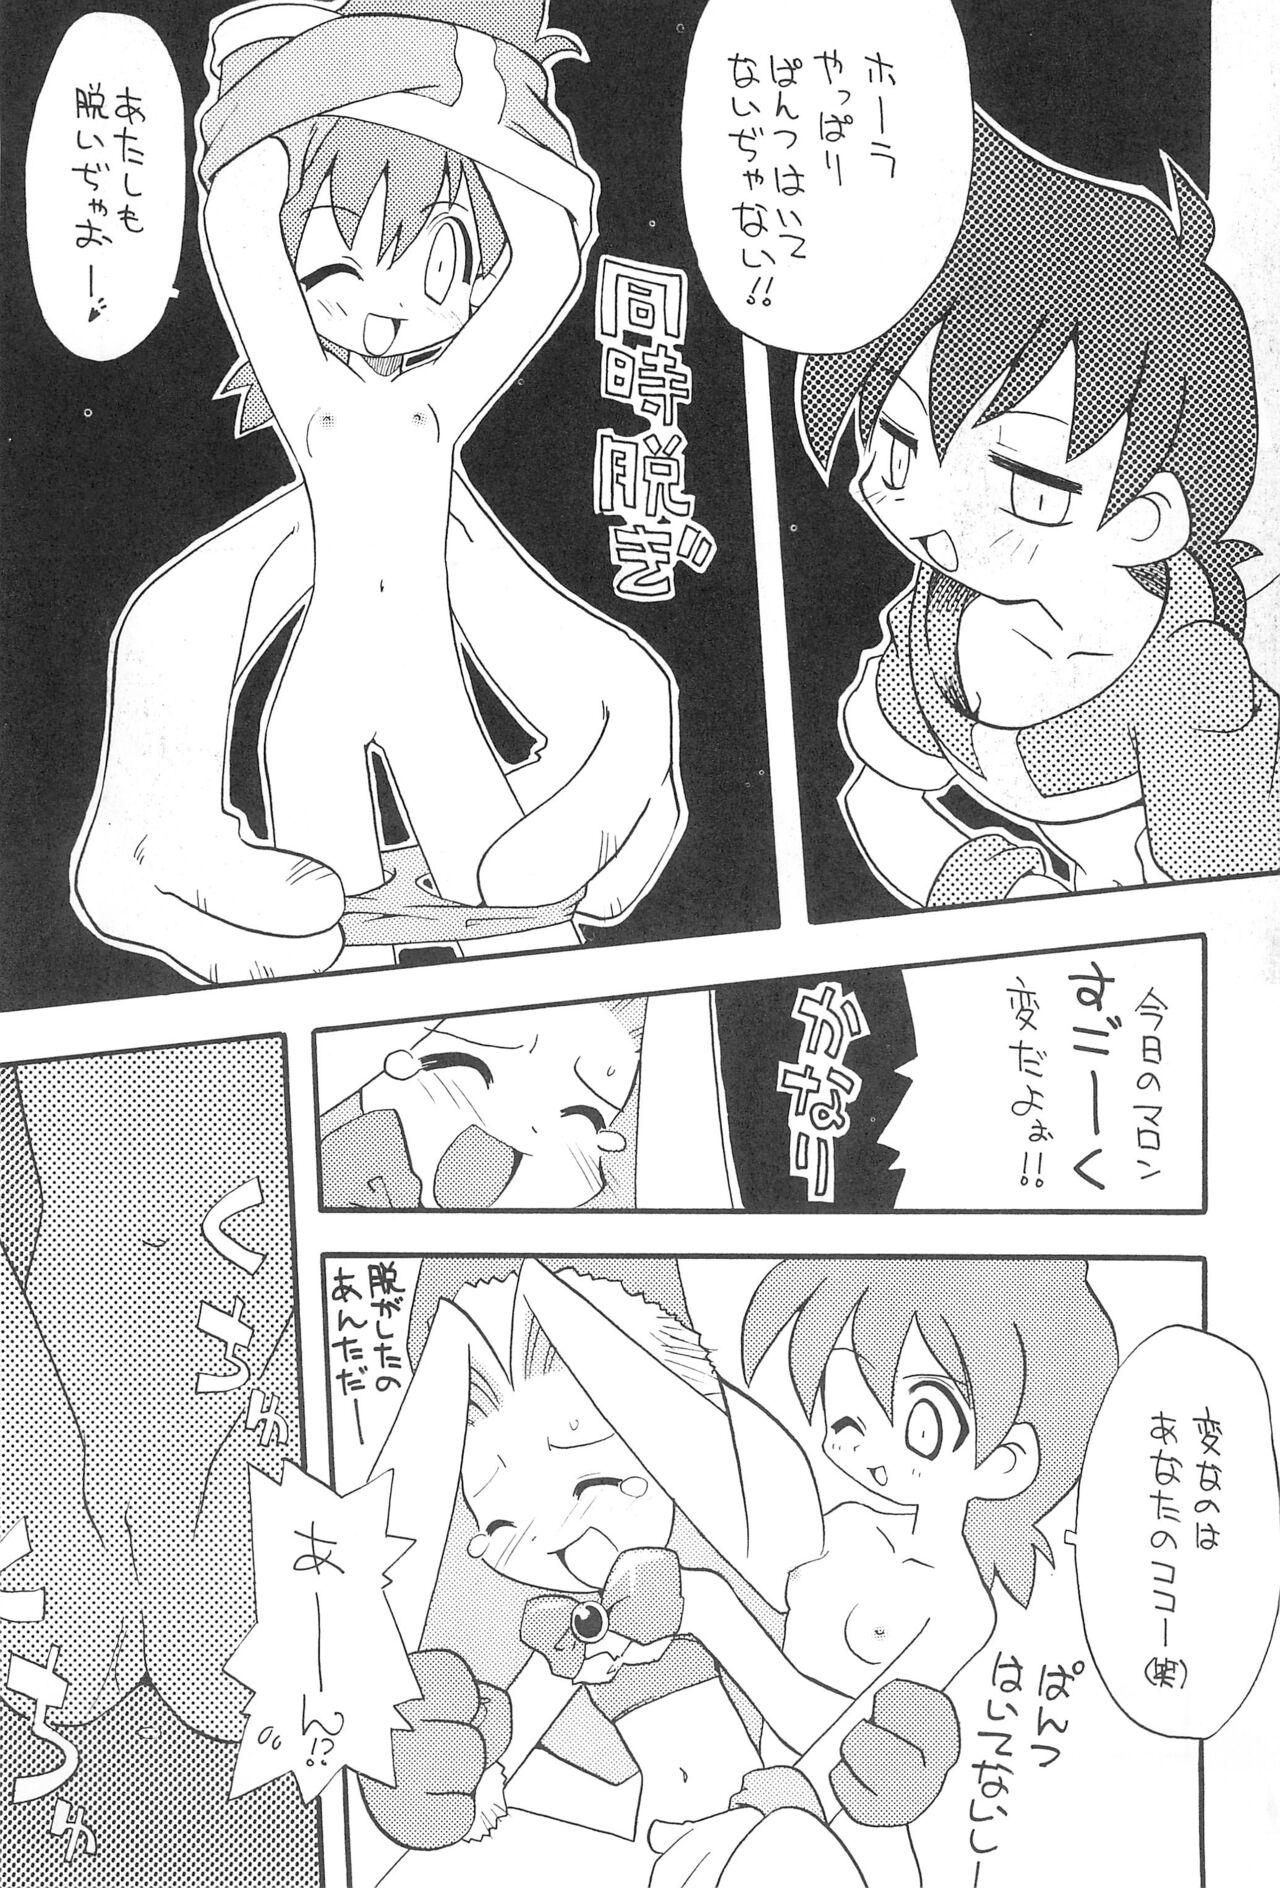 Bra BOKOSUKA Juicy - Page 9